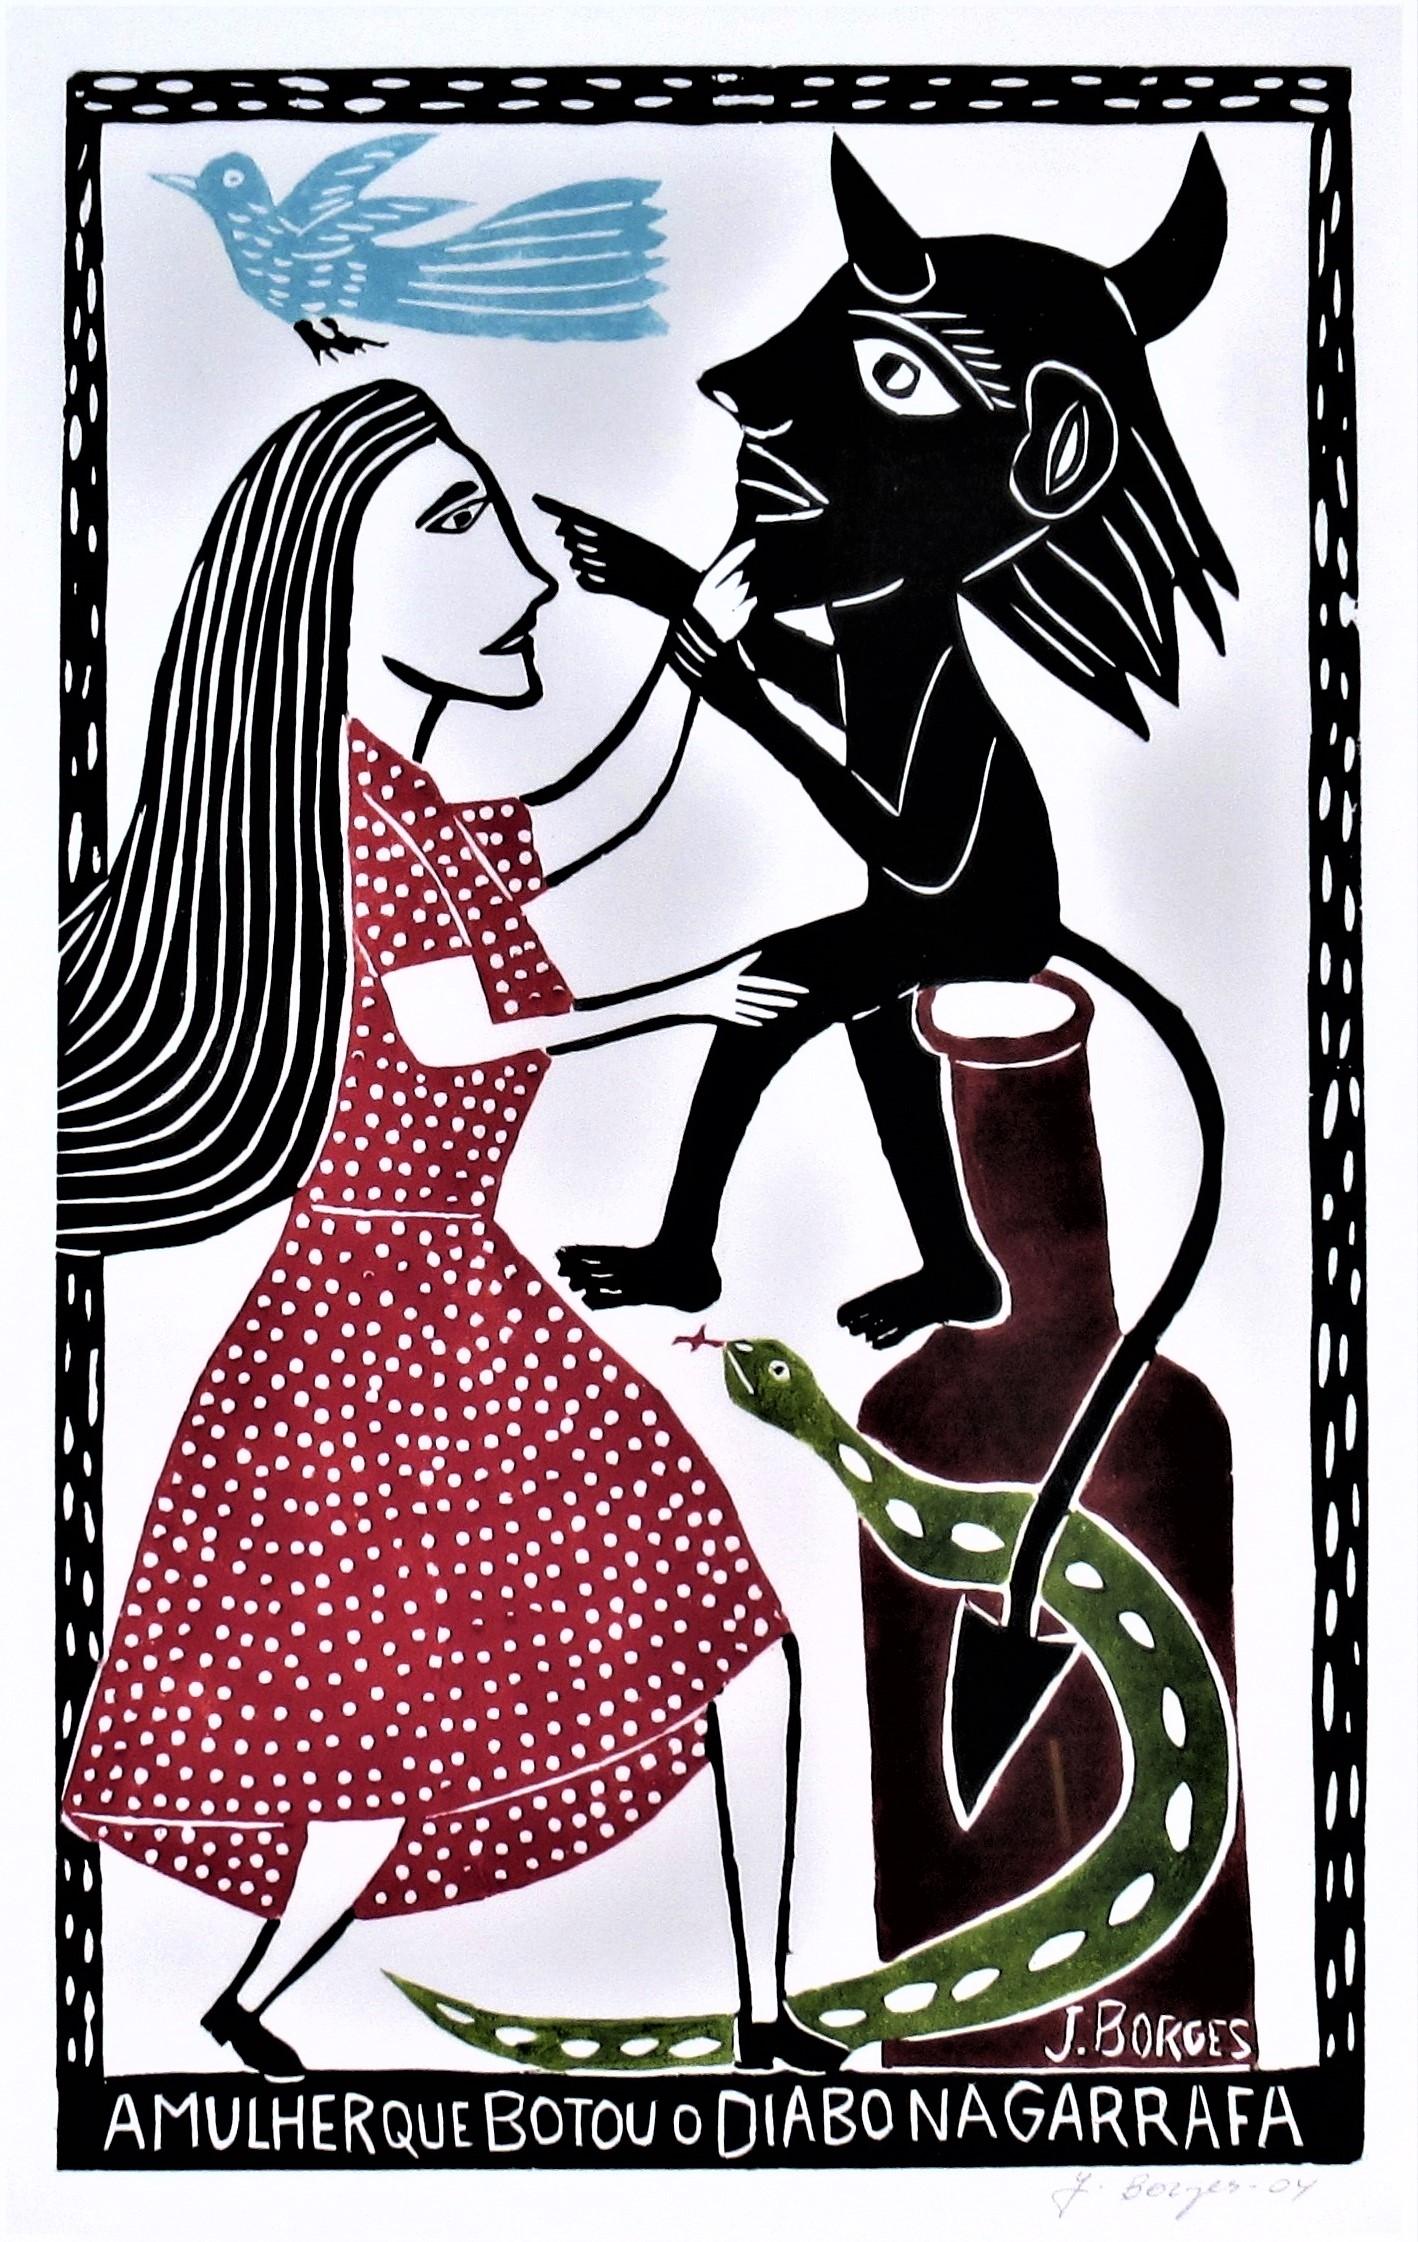 The Woman Put the Devil in a Bottle - Print by José Francisco Borges